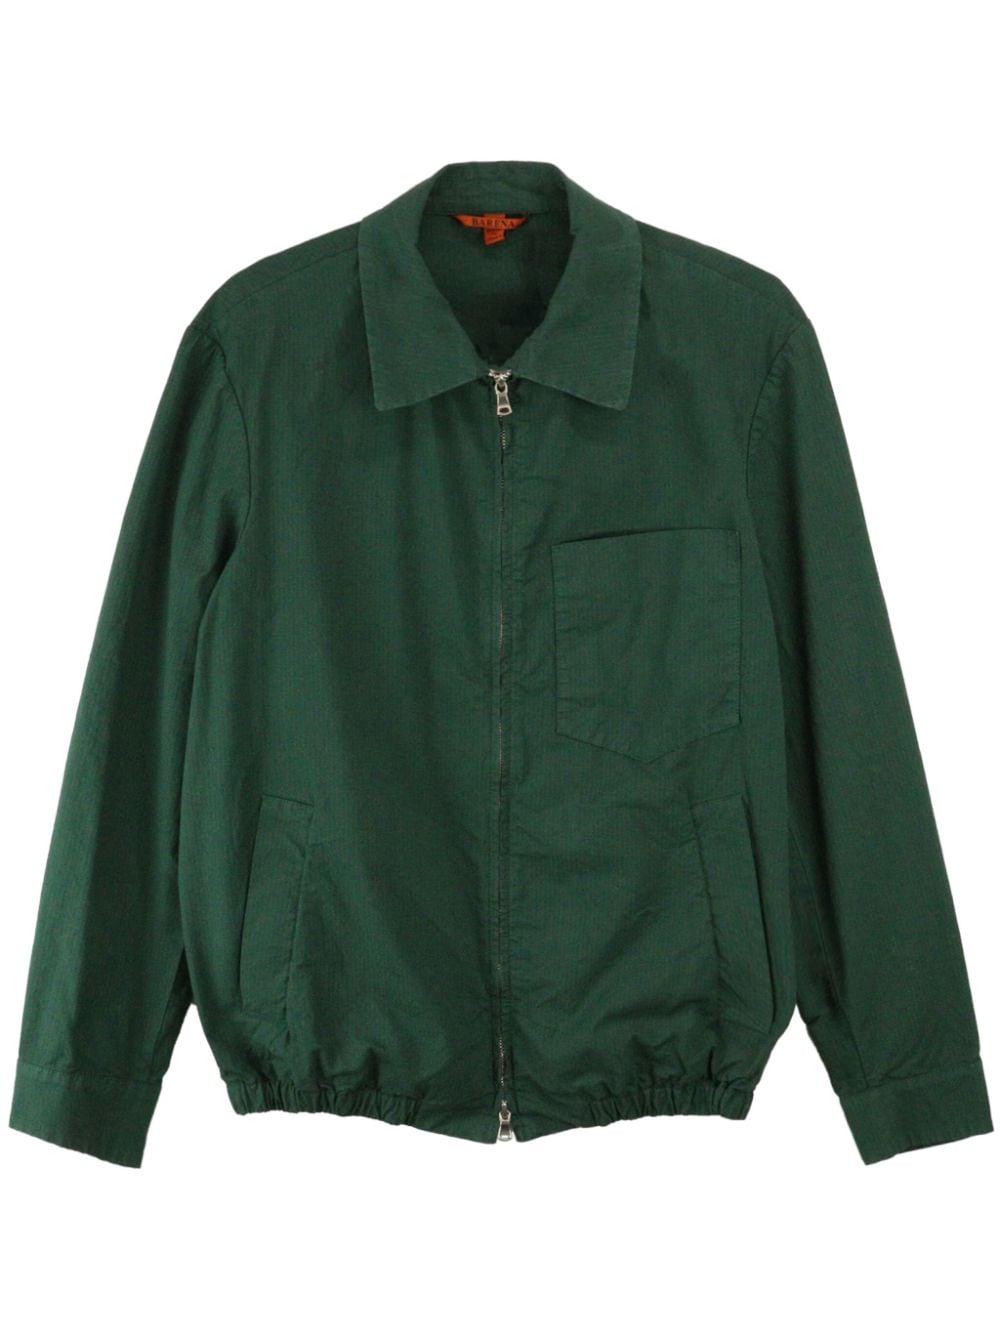 Zaleto Mariol zip-up shirt jacket